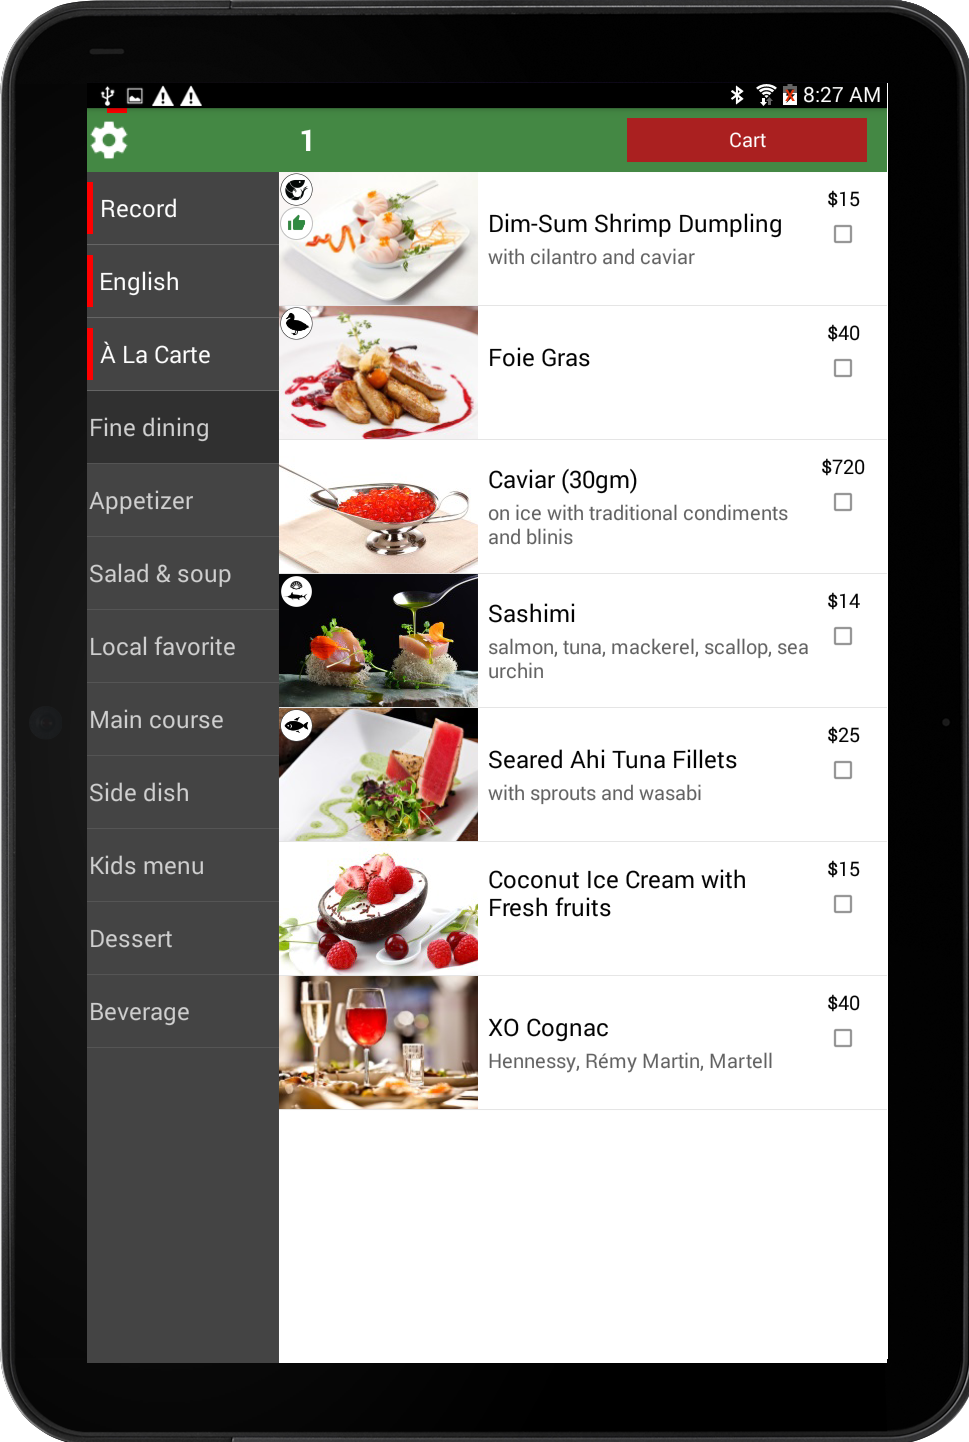 Restaurant Menu App on iPad